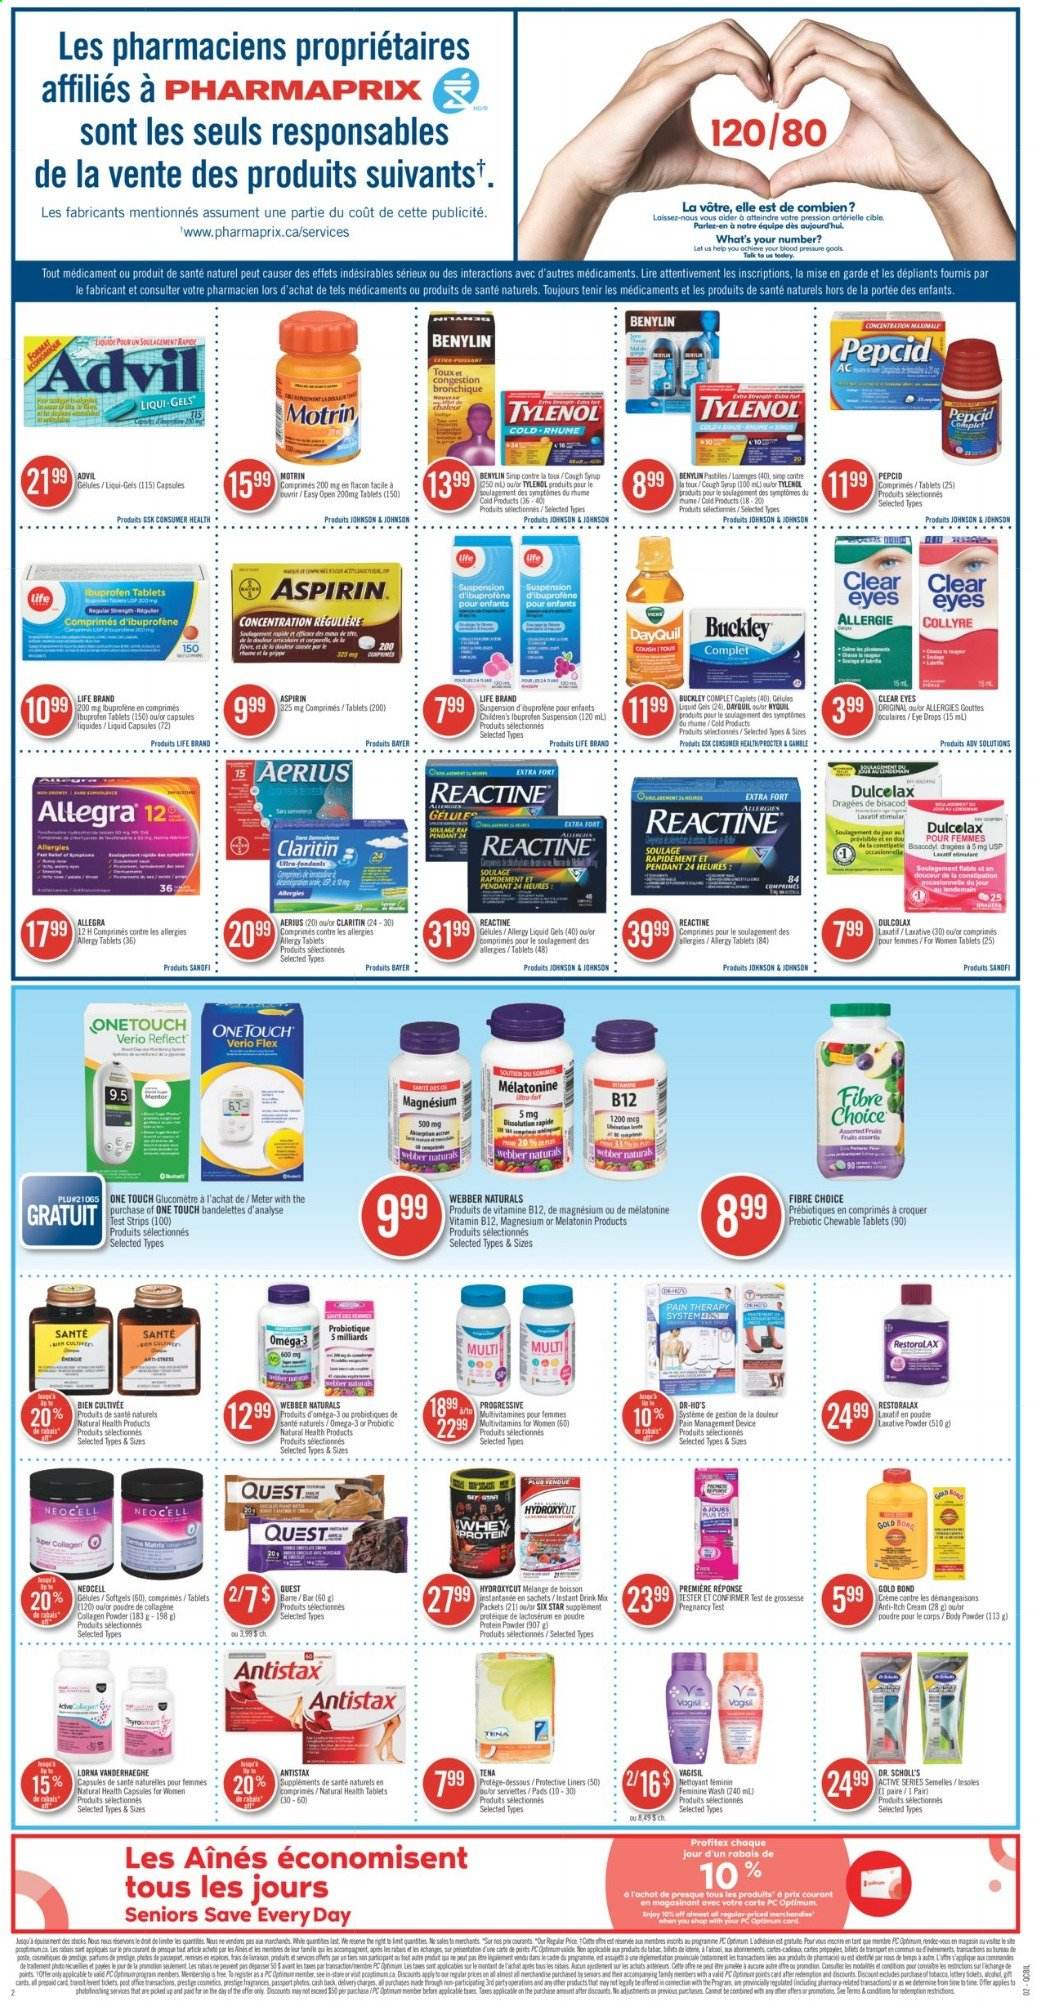 thumbnail - Pharmaprix Flyer - March 06, 2021 - March 11, 2021 - Sales products - tart, syrup, Johnson's, pendant, DayQuil, Dulcolax, magnesium, Melatonin, multivitamin, Tylenol, Ibuprofen, Pepcid, Omega-3, eye drops, Advil Rapid, vitamin B12, whey protein, aspirin, Bayer, Benylin, Motrin, Dr. Scholl's. Page 2.